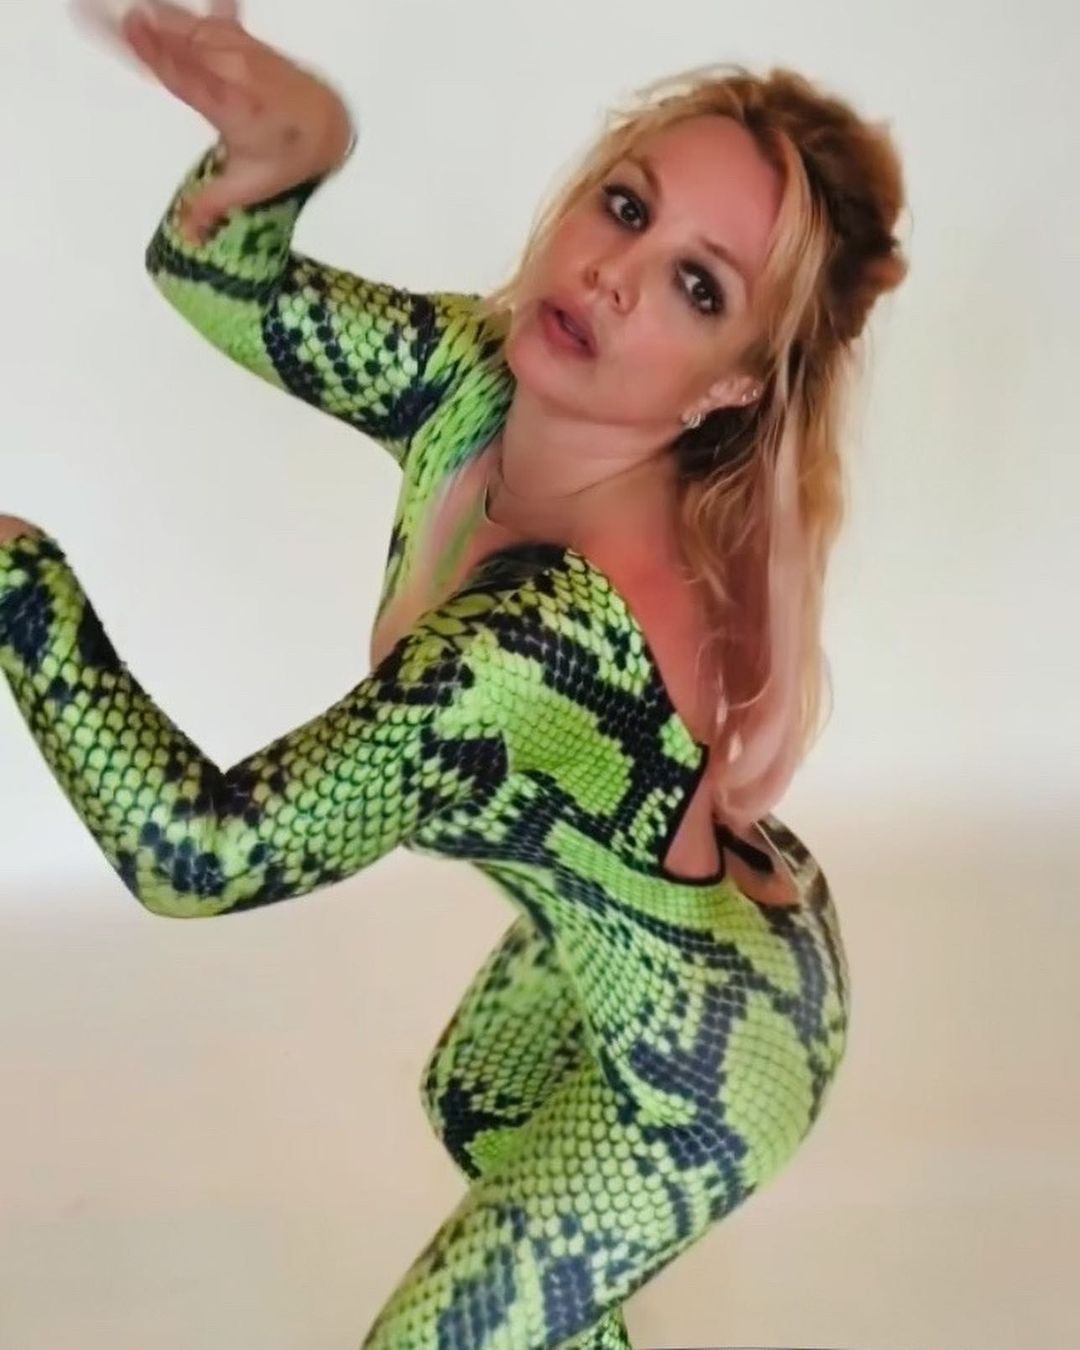 Britney Spears in snake catsuit